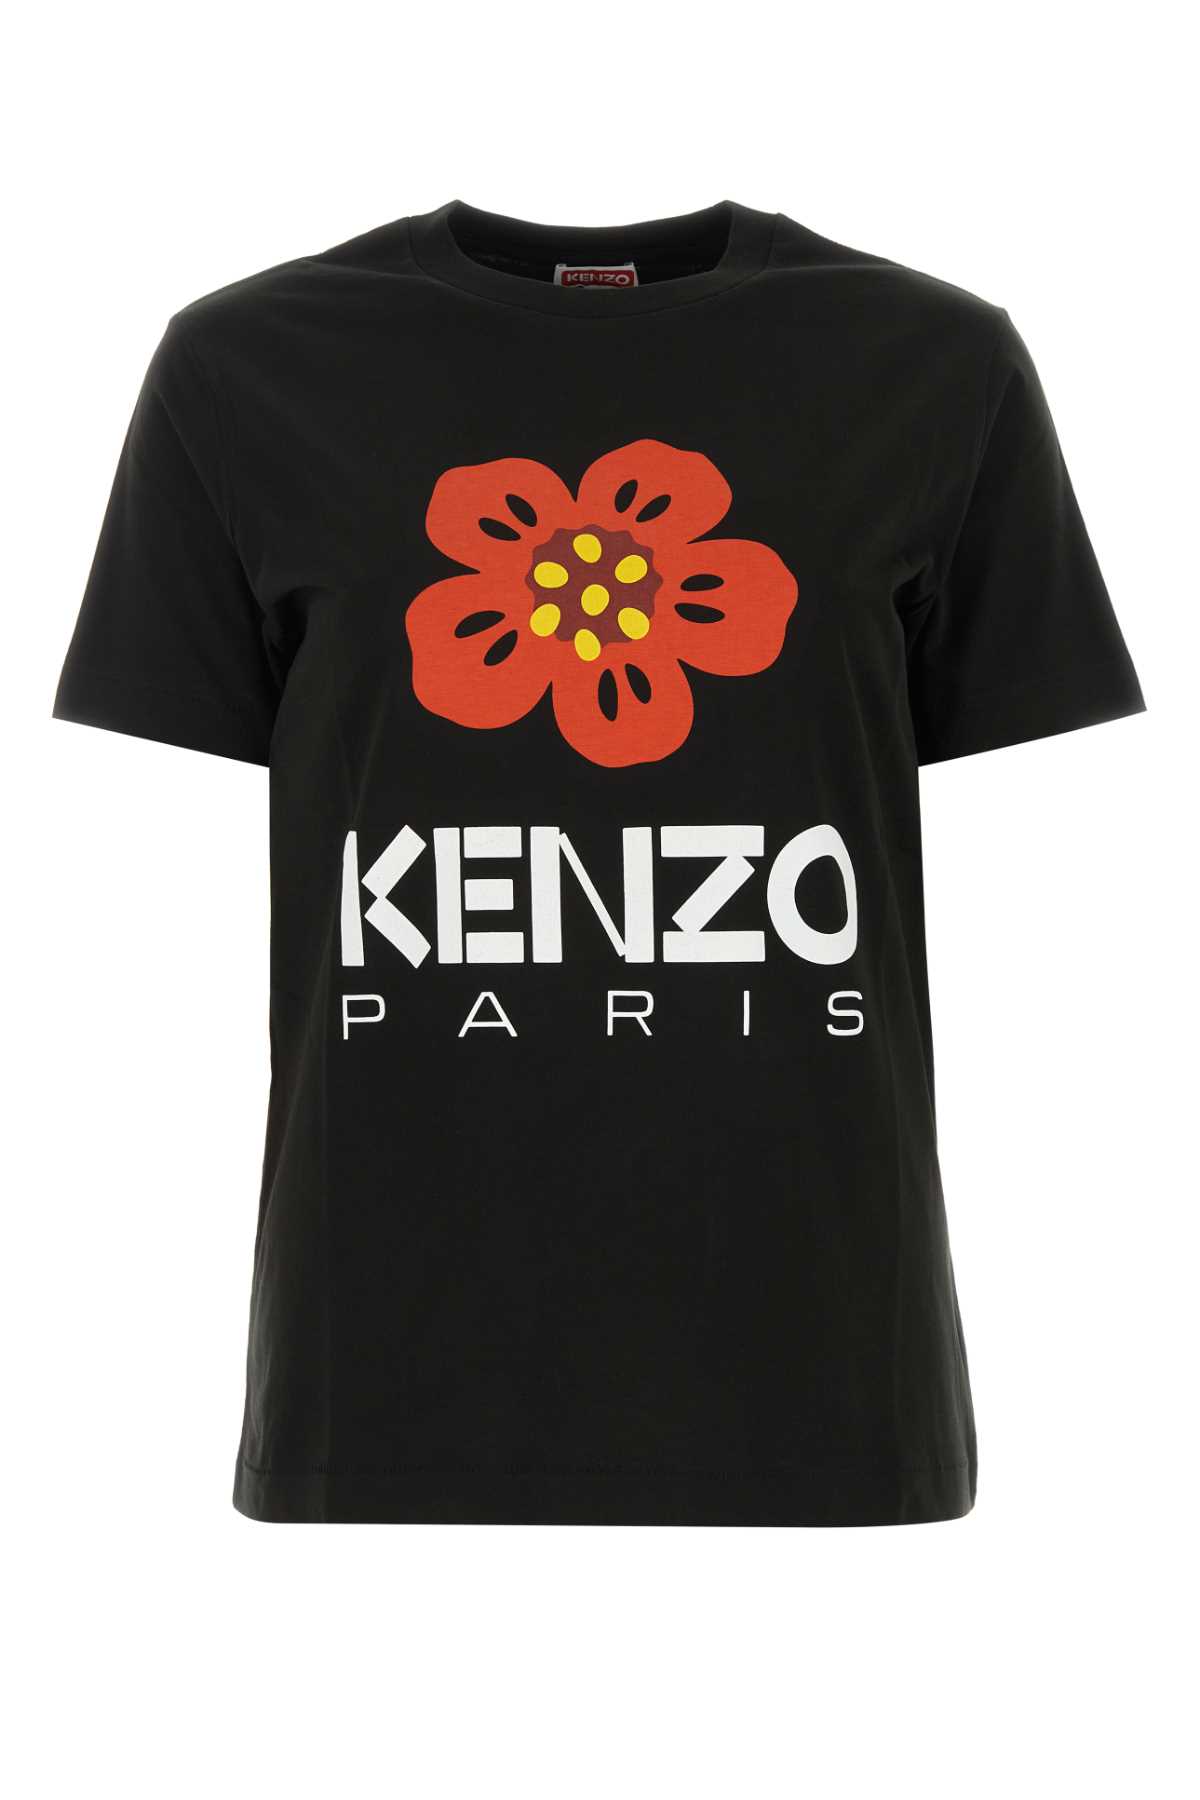 Shop Kenzo Black Cotton T-shirt